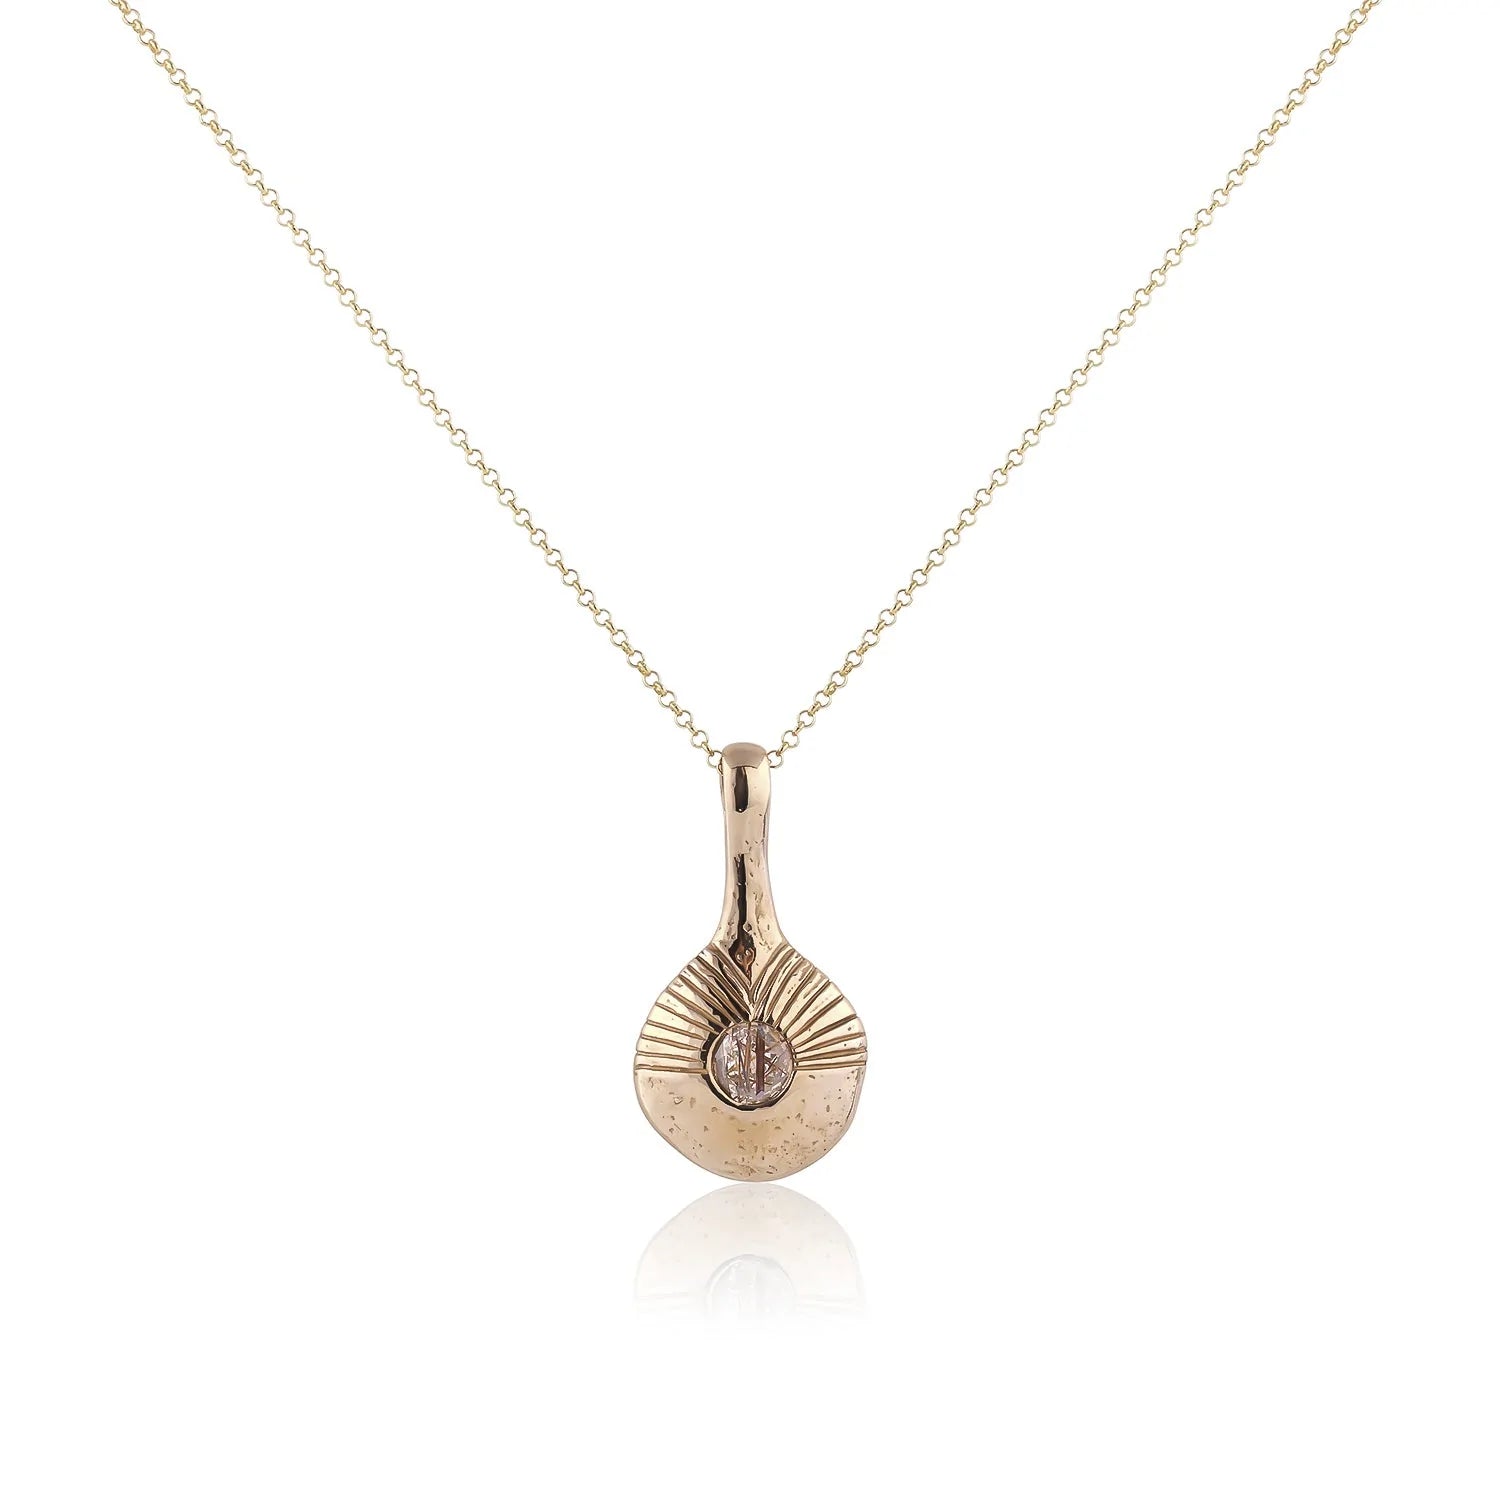 Reflections Pendulum Necklace - Bronze